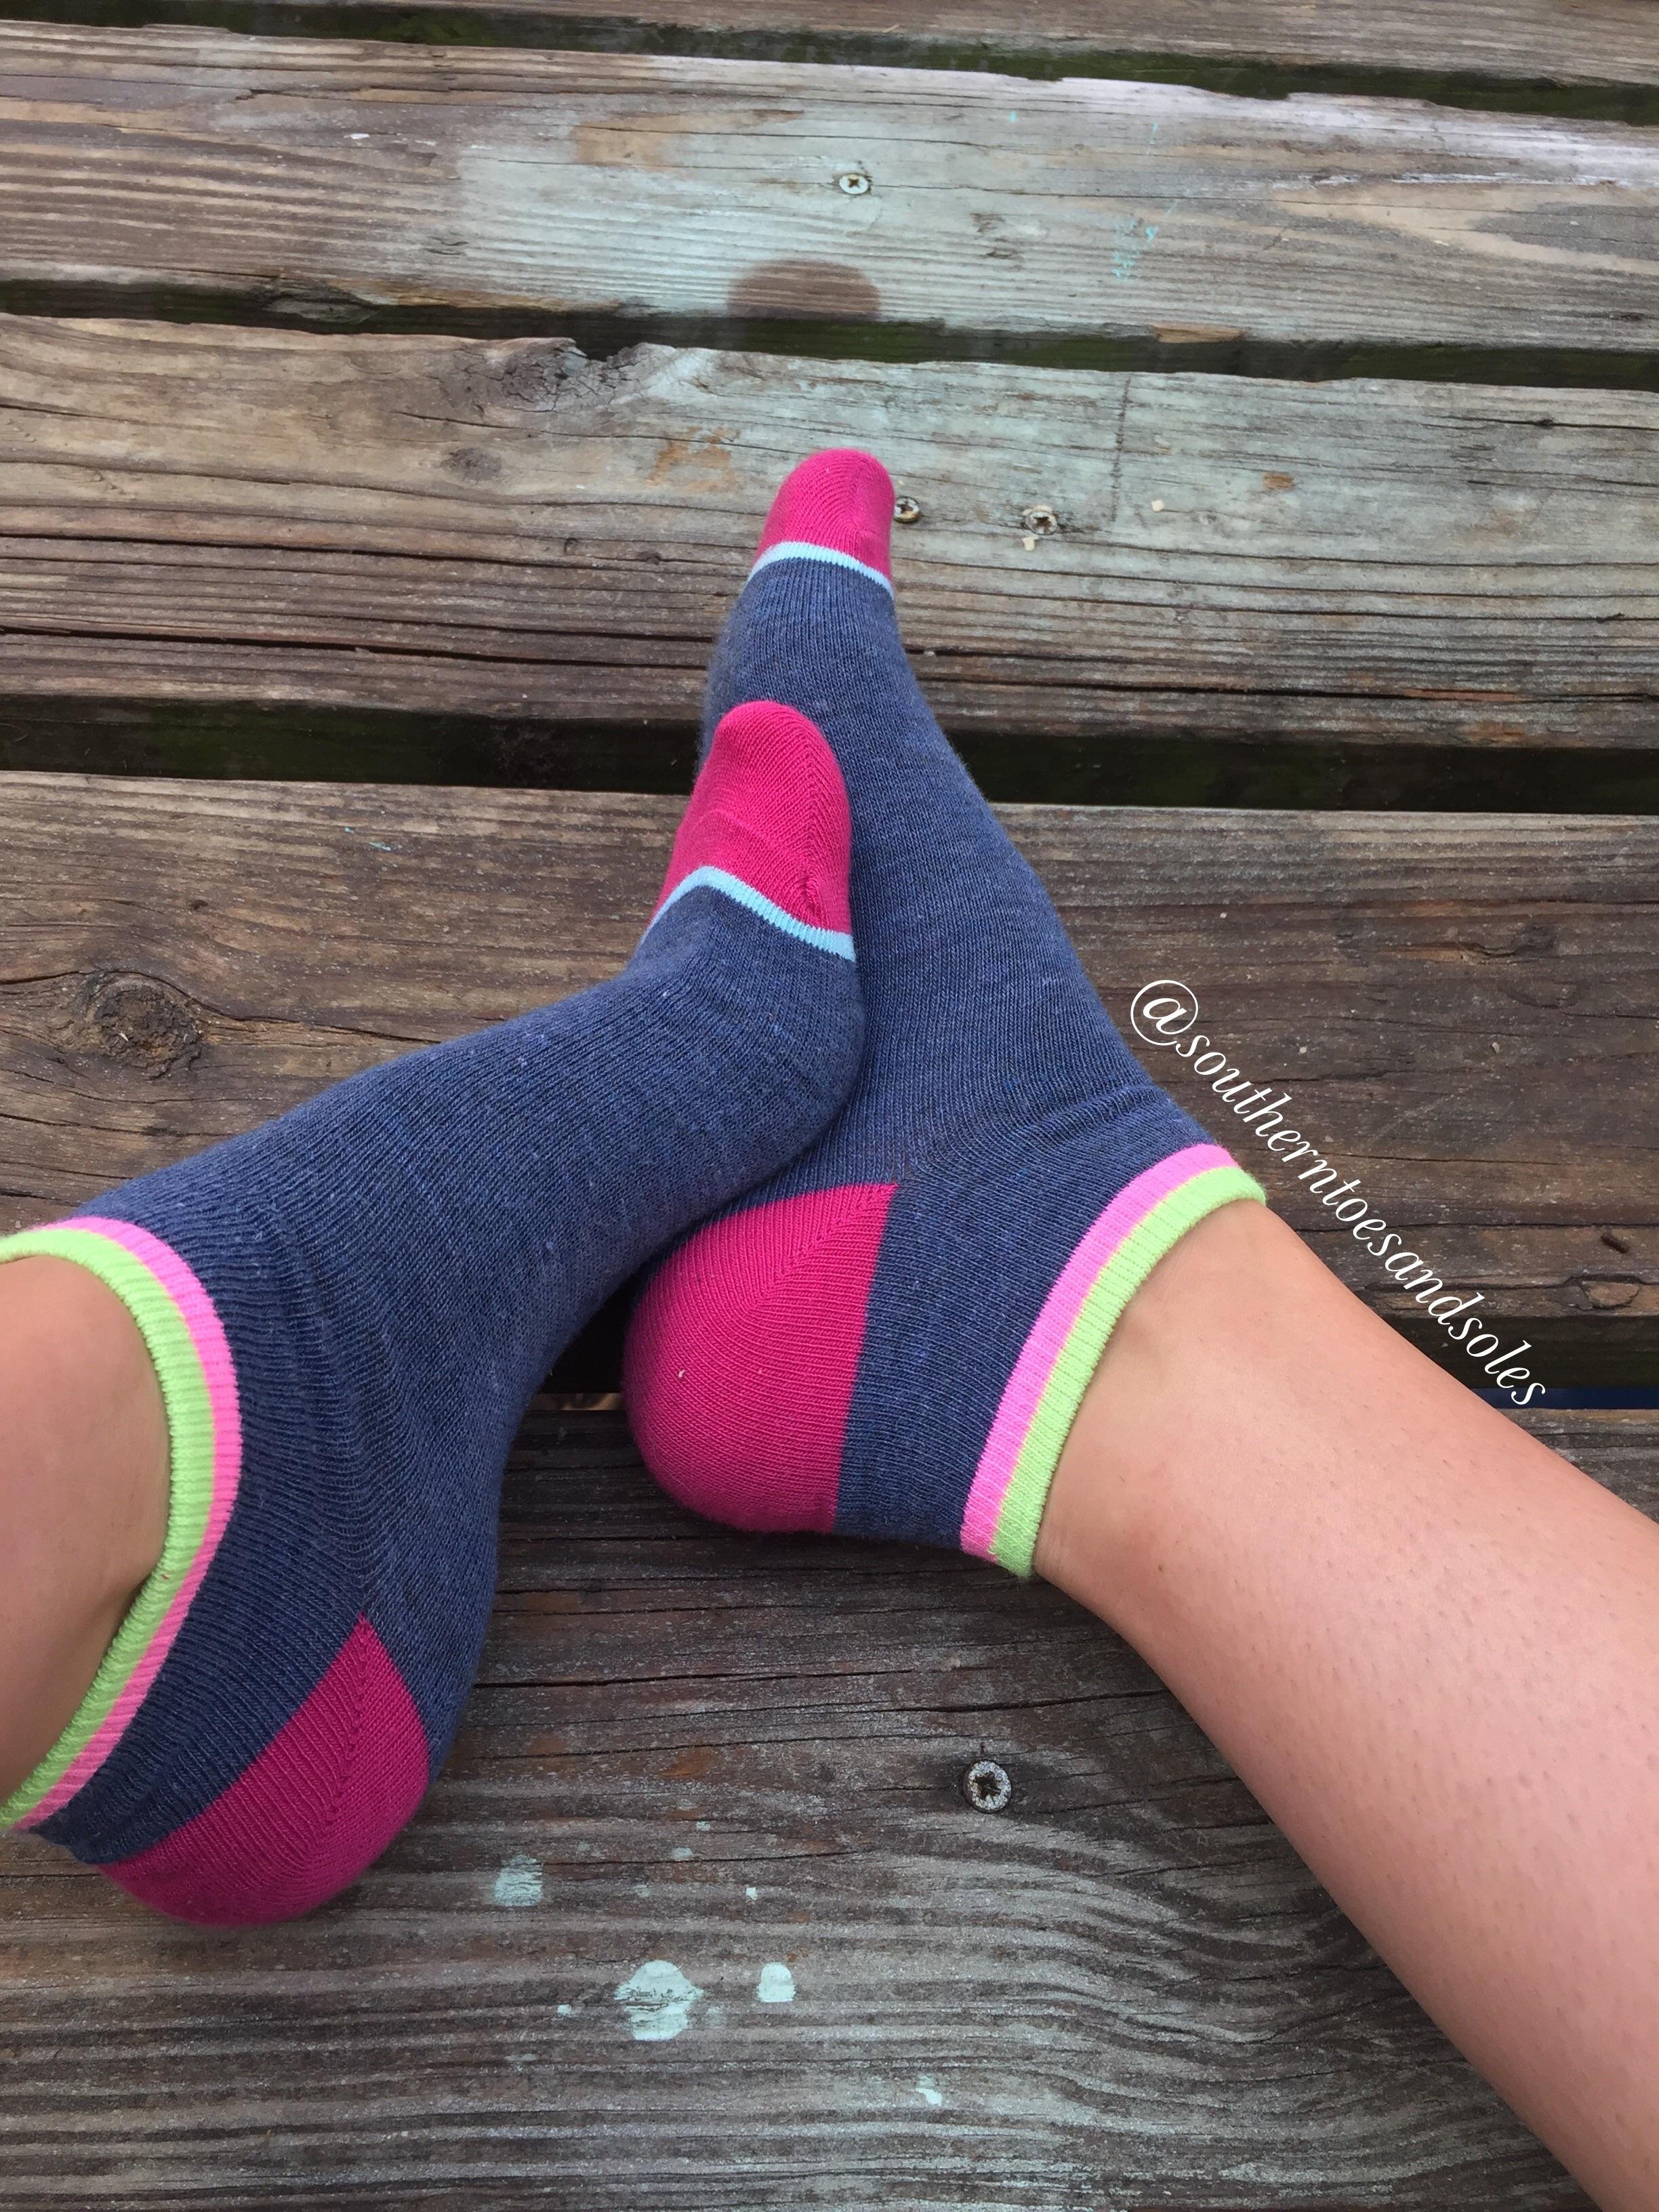 Colorful socks are my kryptonite